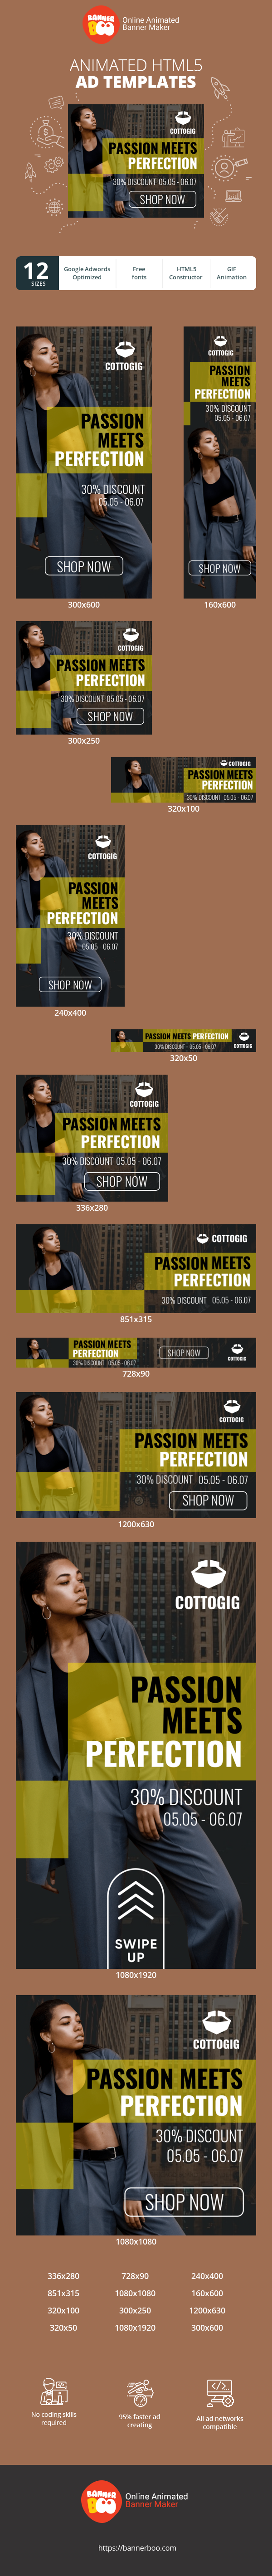 Шаблон рекламного банера — Passion Meet Perfection — 30% Discount